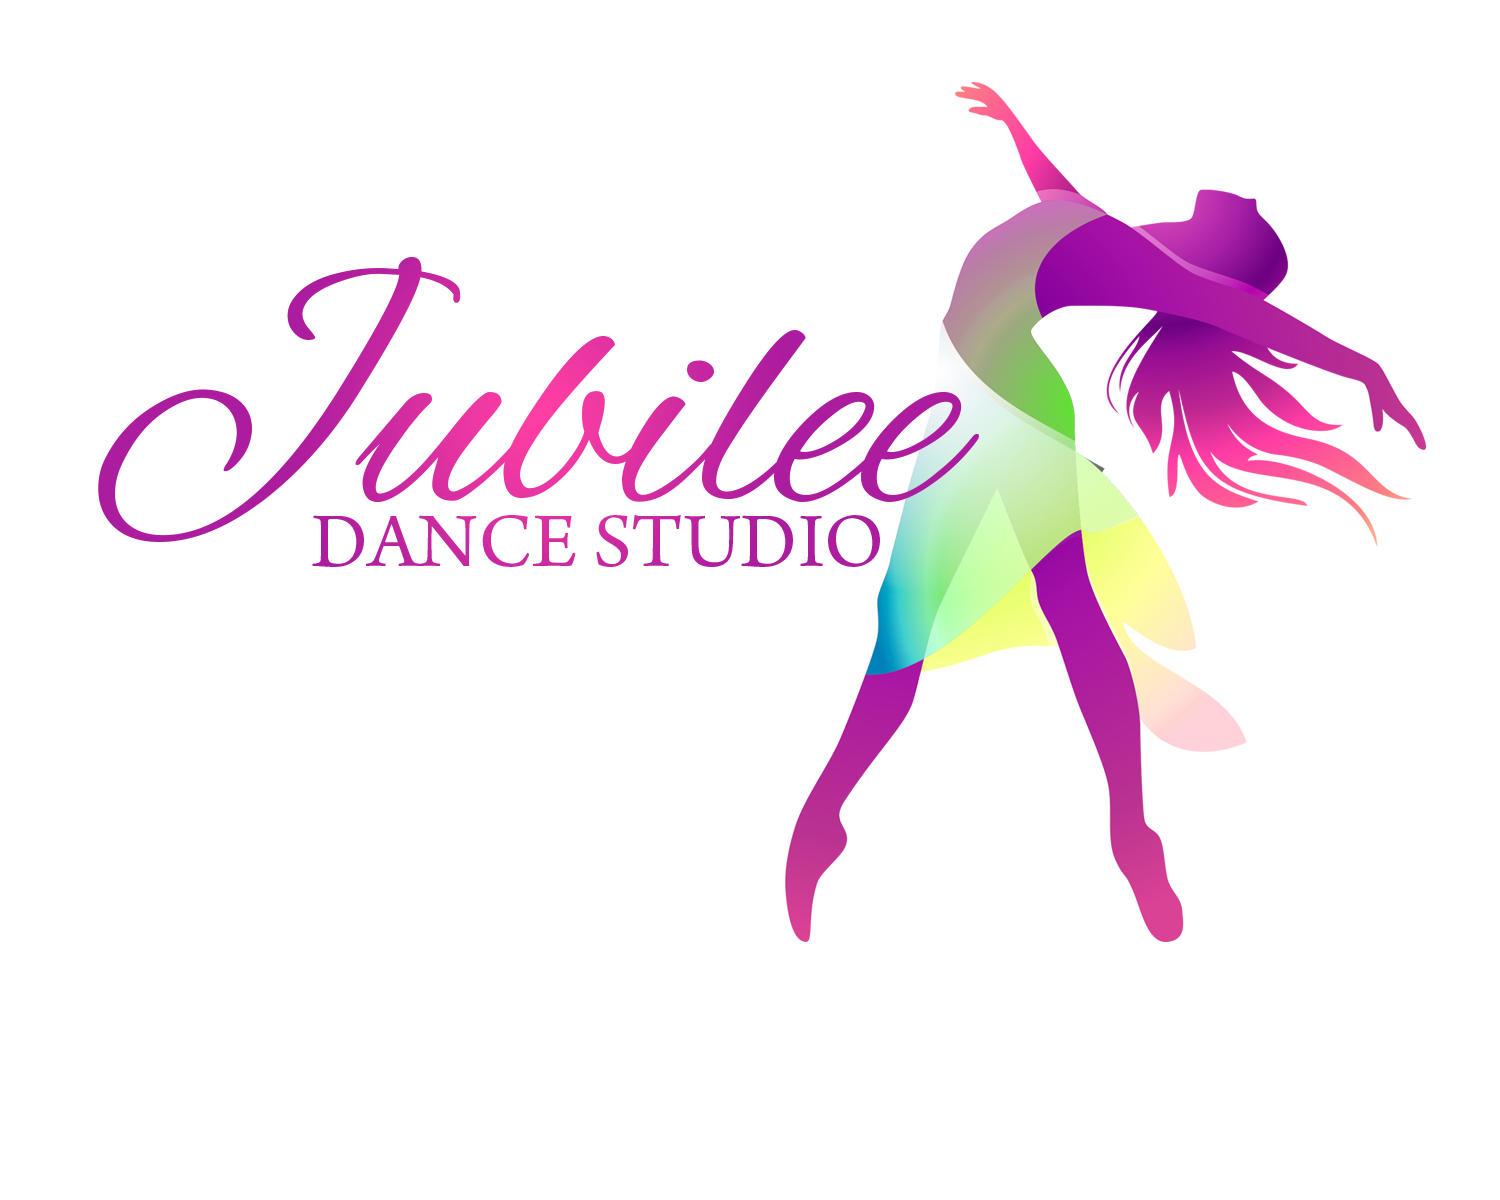 Студия танца логотип. Логотип танцевальной студии. Логотип танцевального коллектива. Логотип танцевальной школы. Школа танцев текст